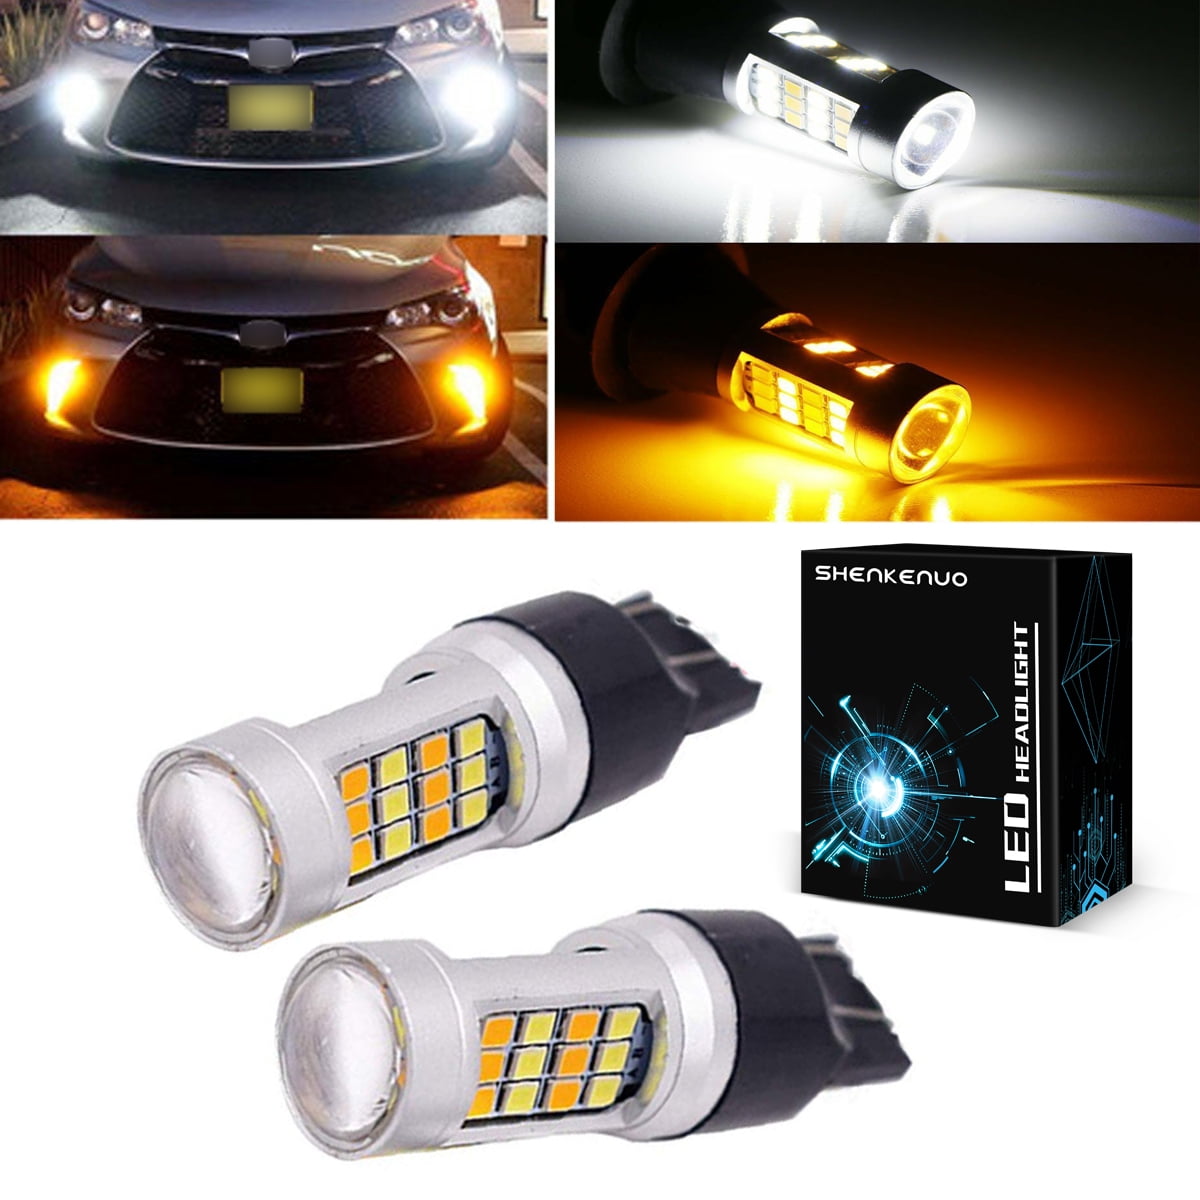 LED headlight bulb, NEOLUX rear stop light / turn signals, standard